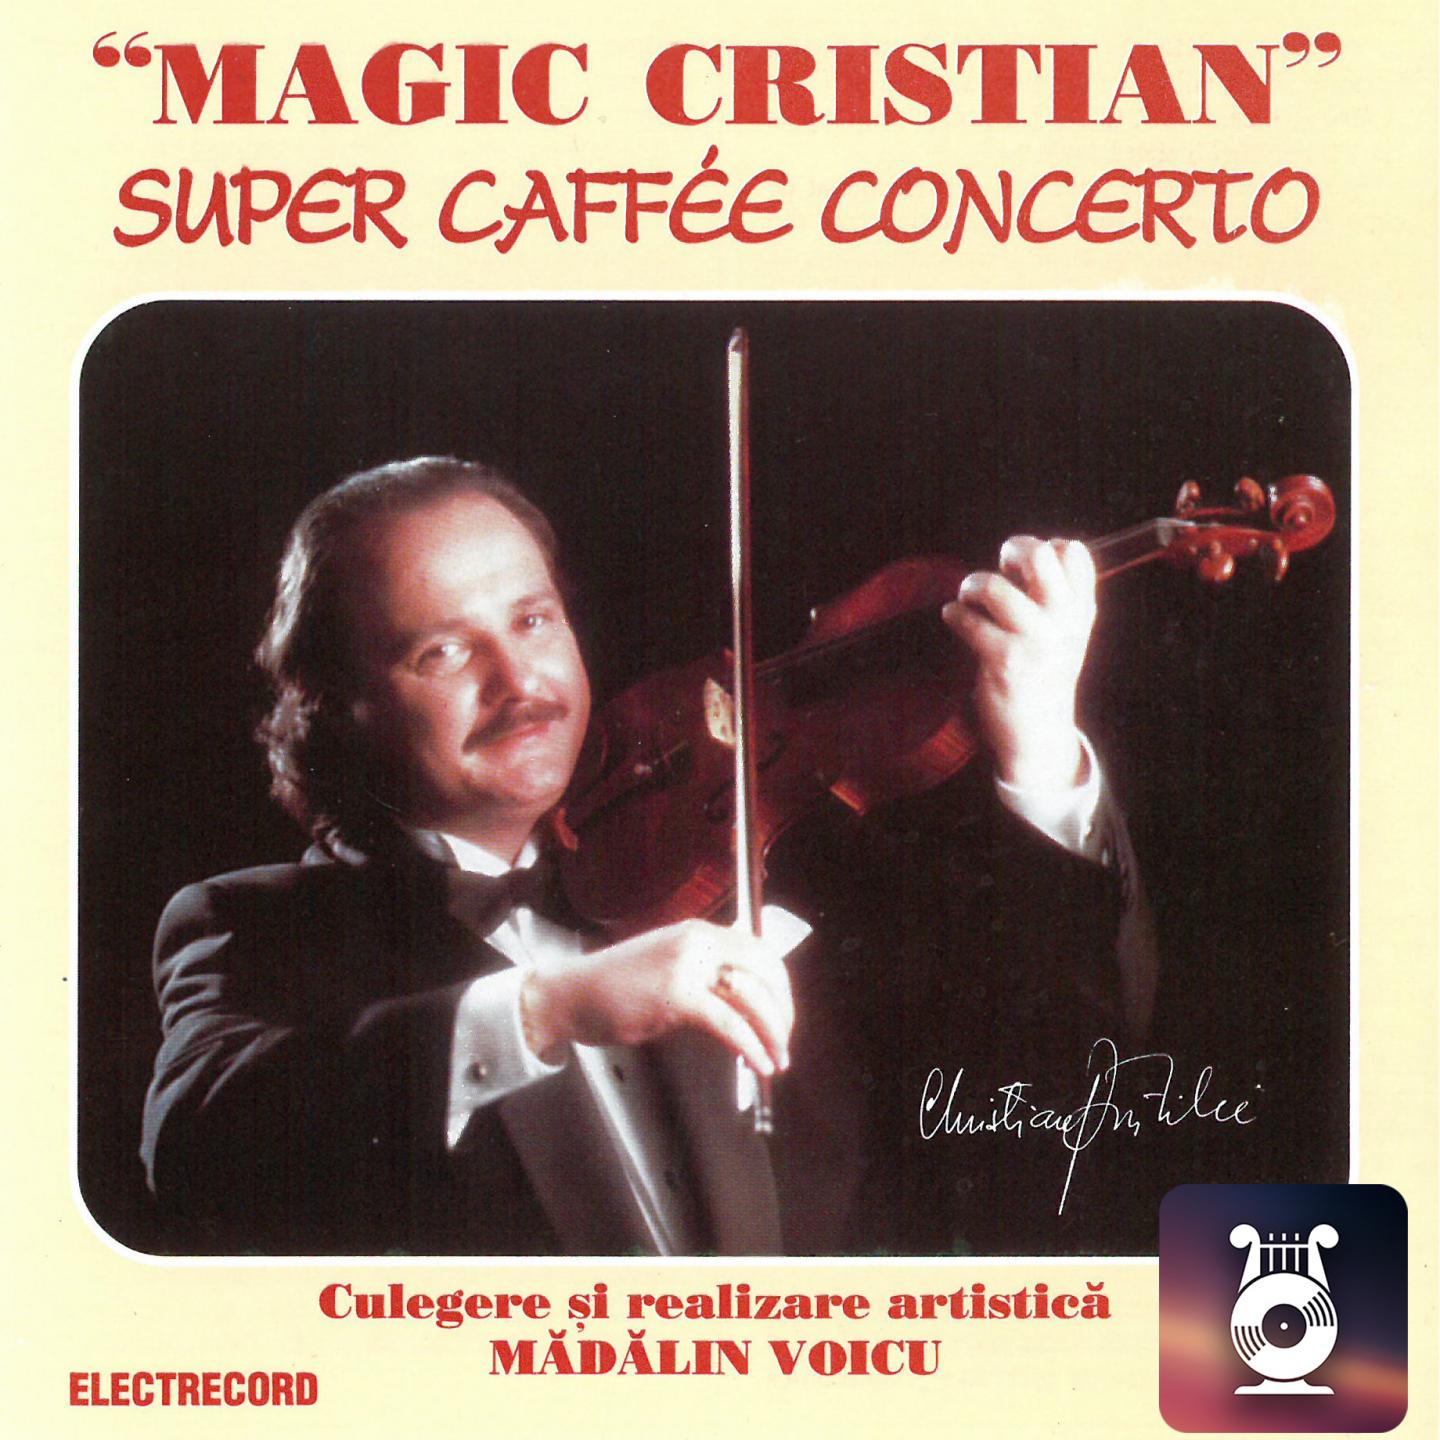 Magic cristian / Super caffe concerto, Vol. II